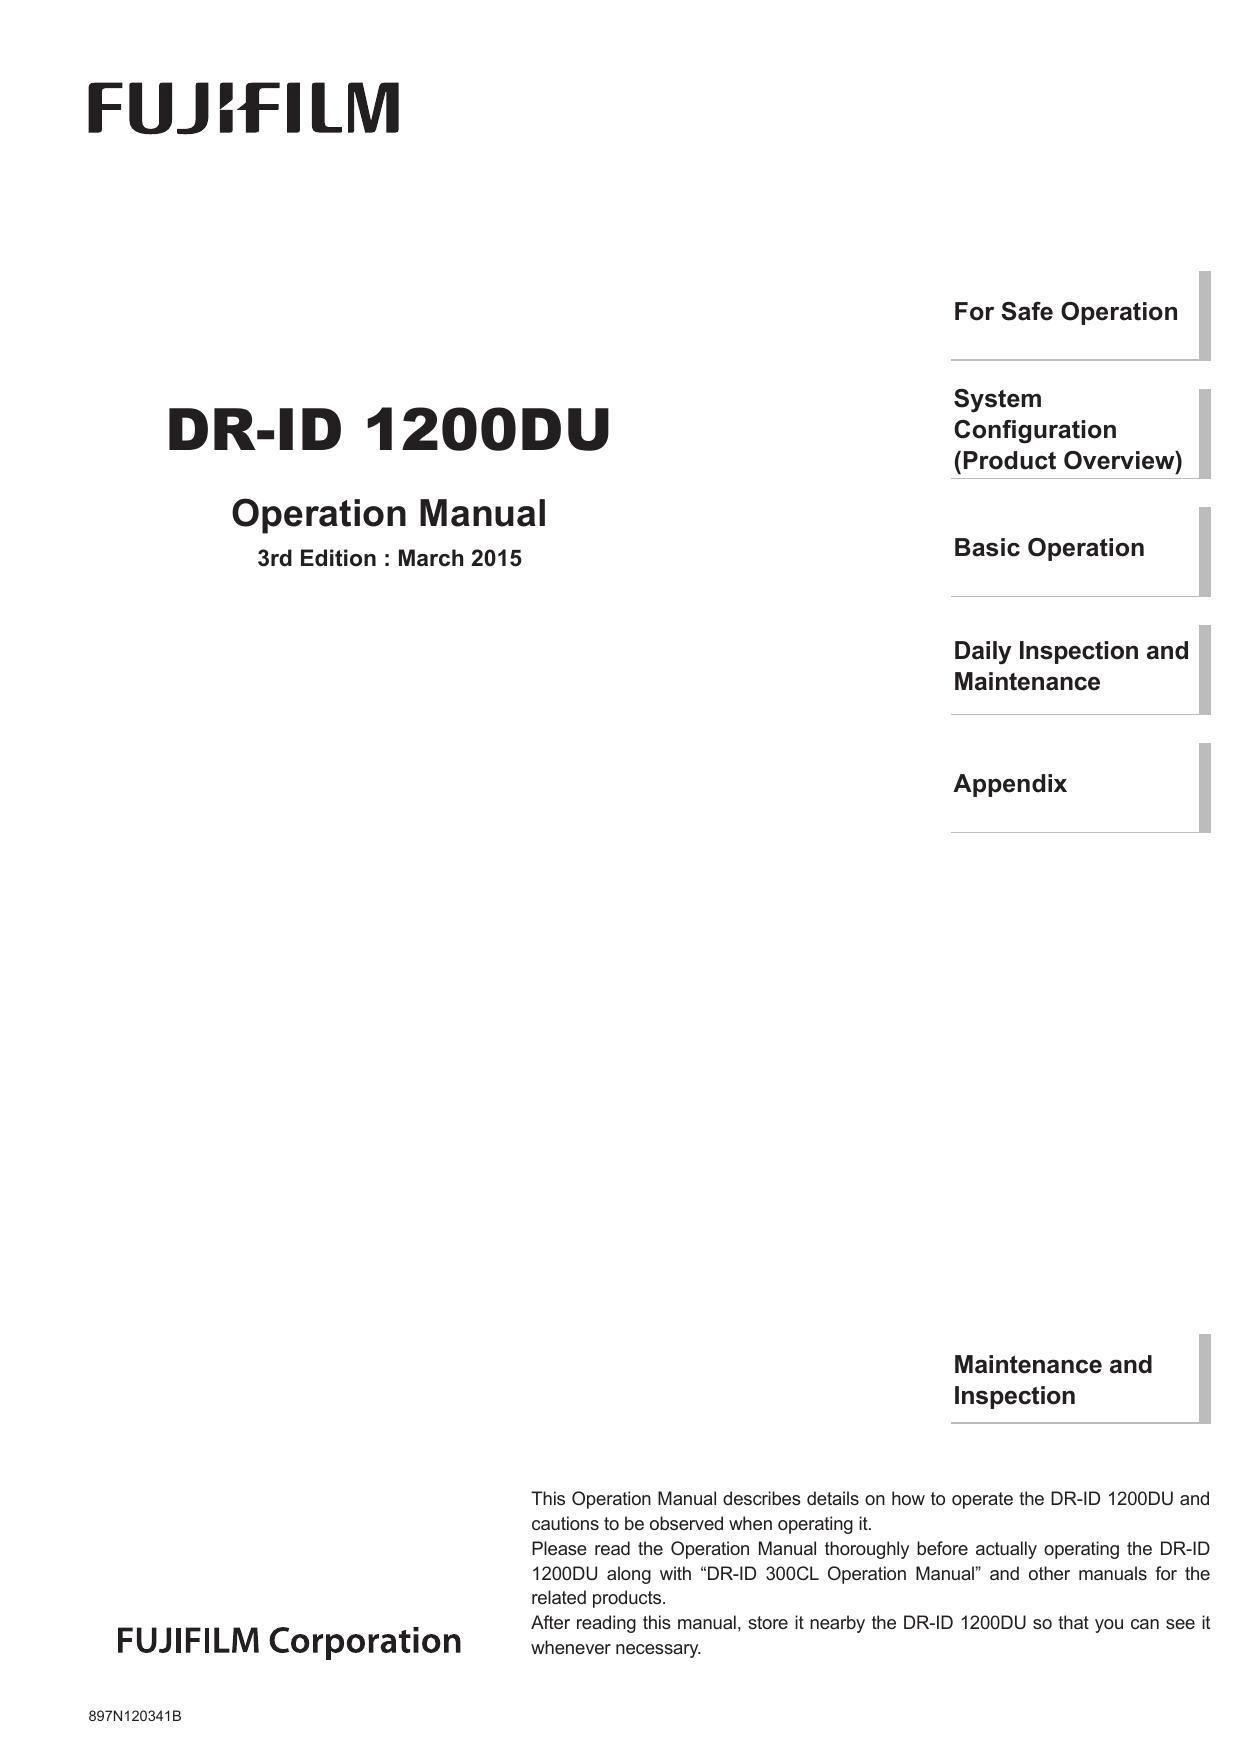 dr-id-1200du-operation-manual.pdf